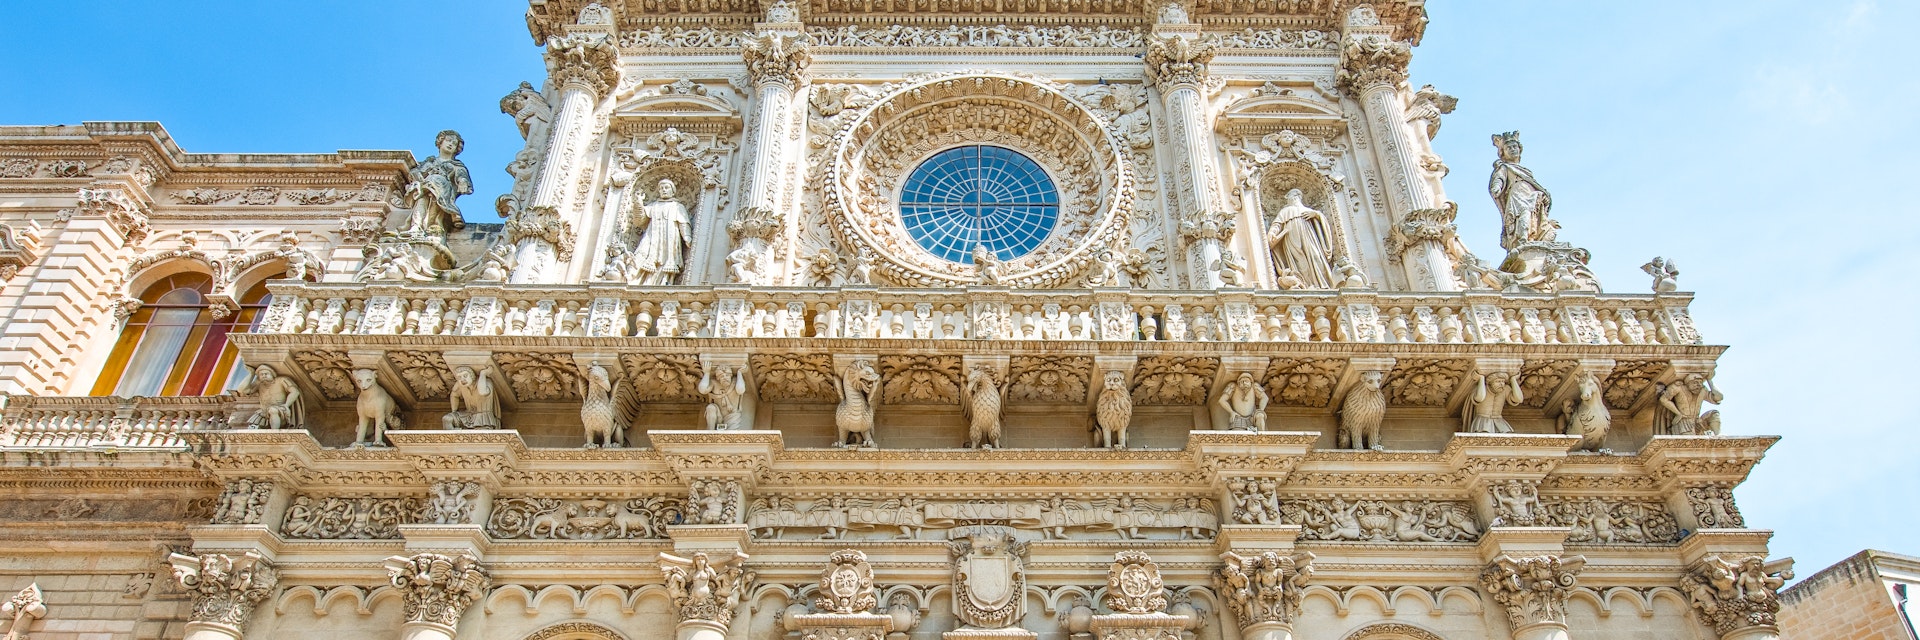 Sculptures on the facade of the Santa Croce Basilica in Lecce.